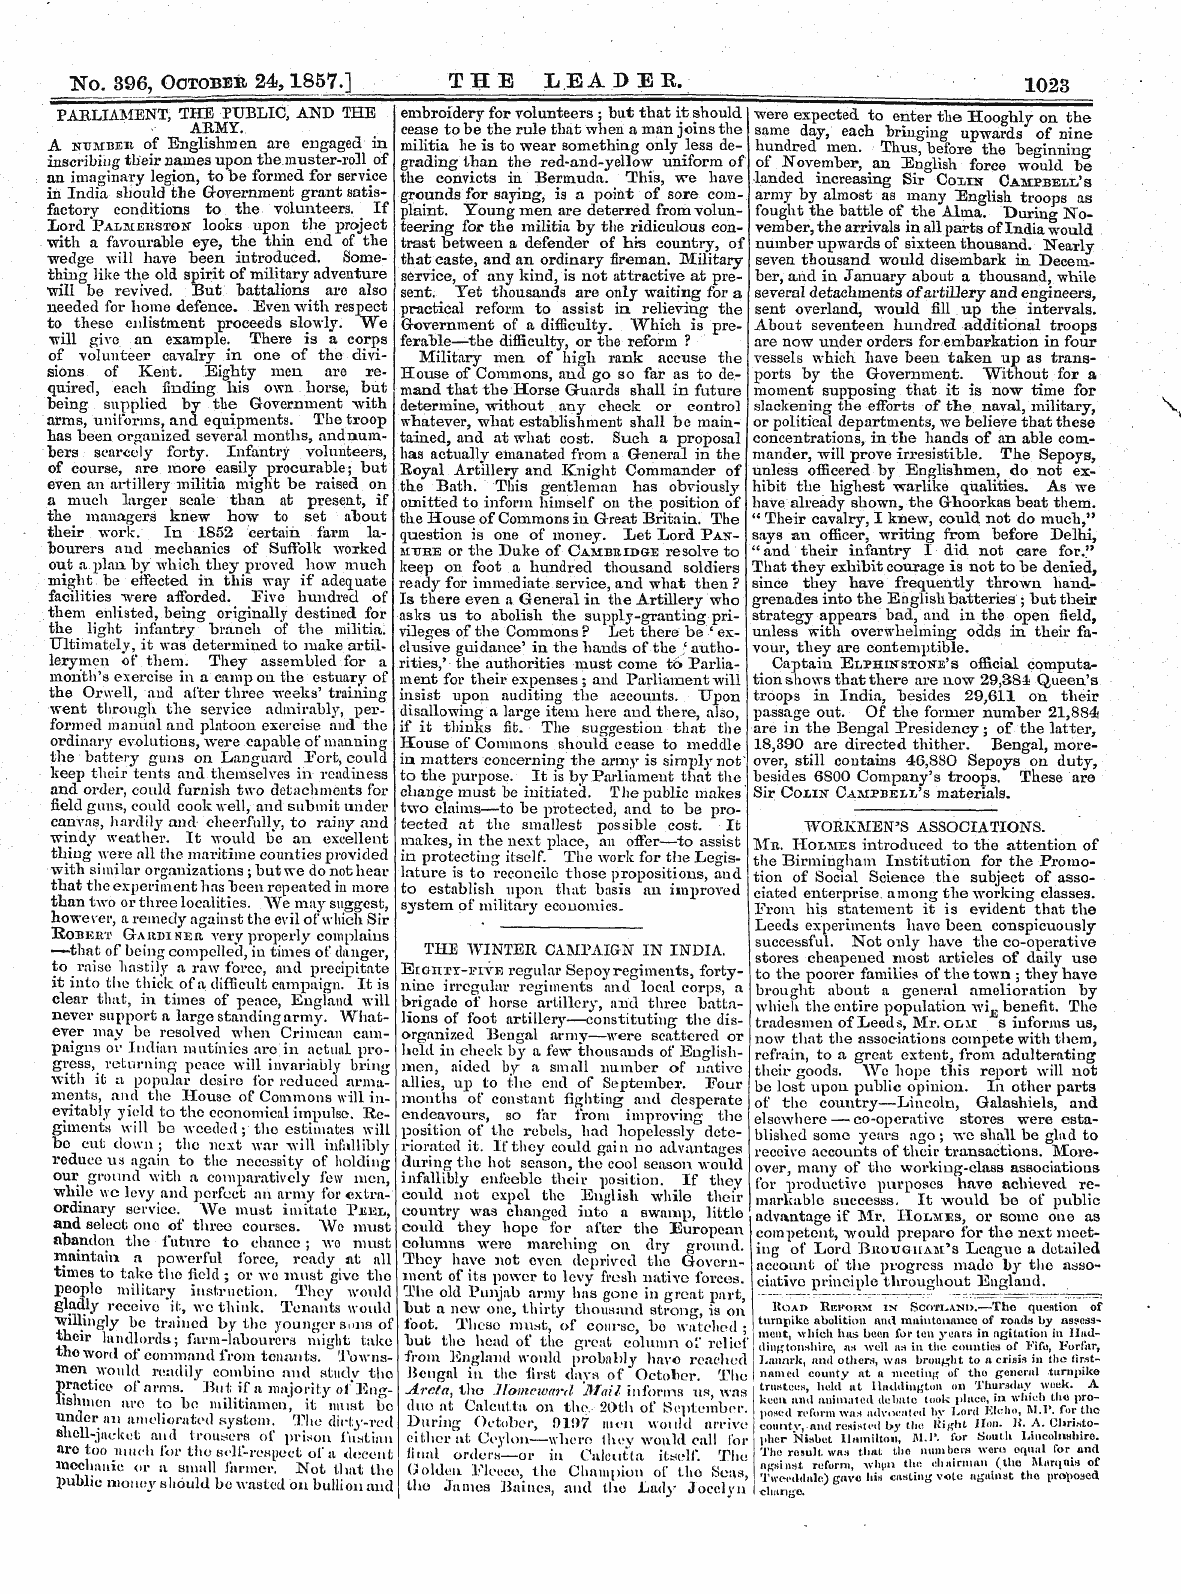 Leader (1850-1860): jS F Y, 2nd edition - Workmen's Associations. Mit. Holmes Intr...